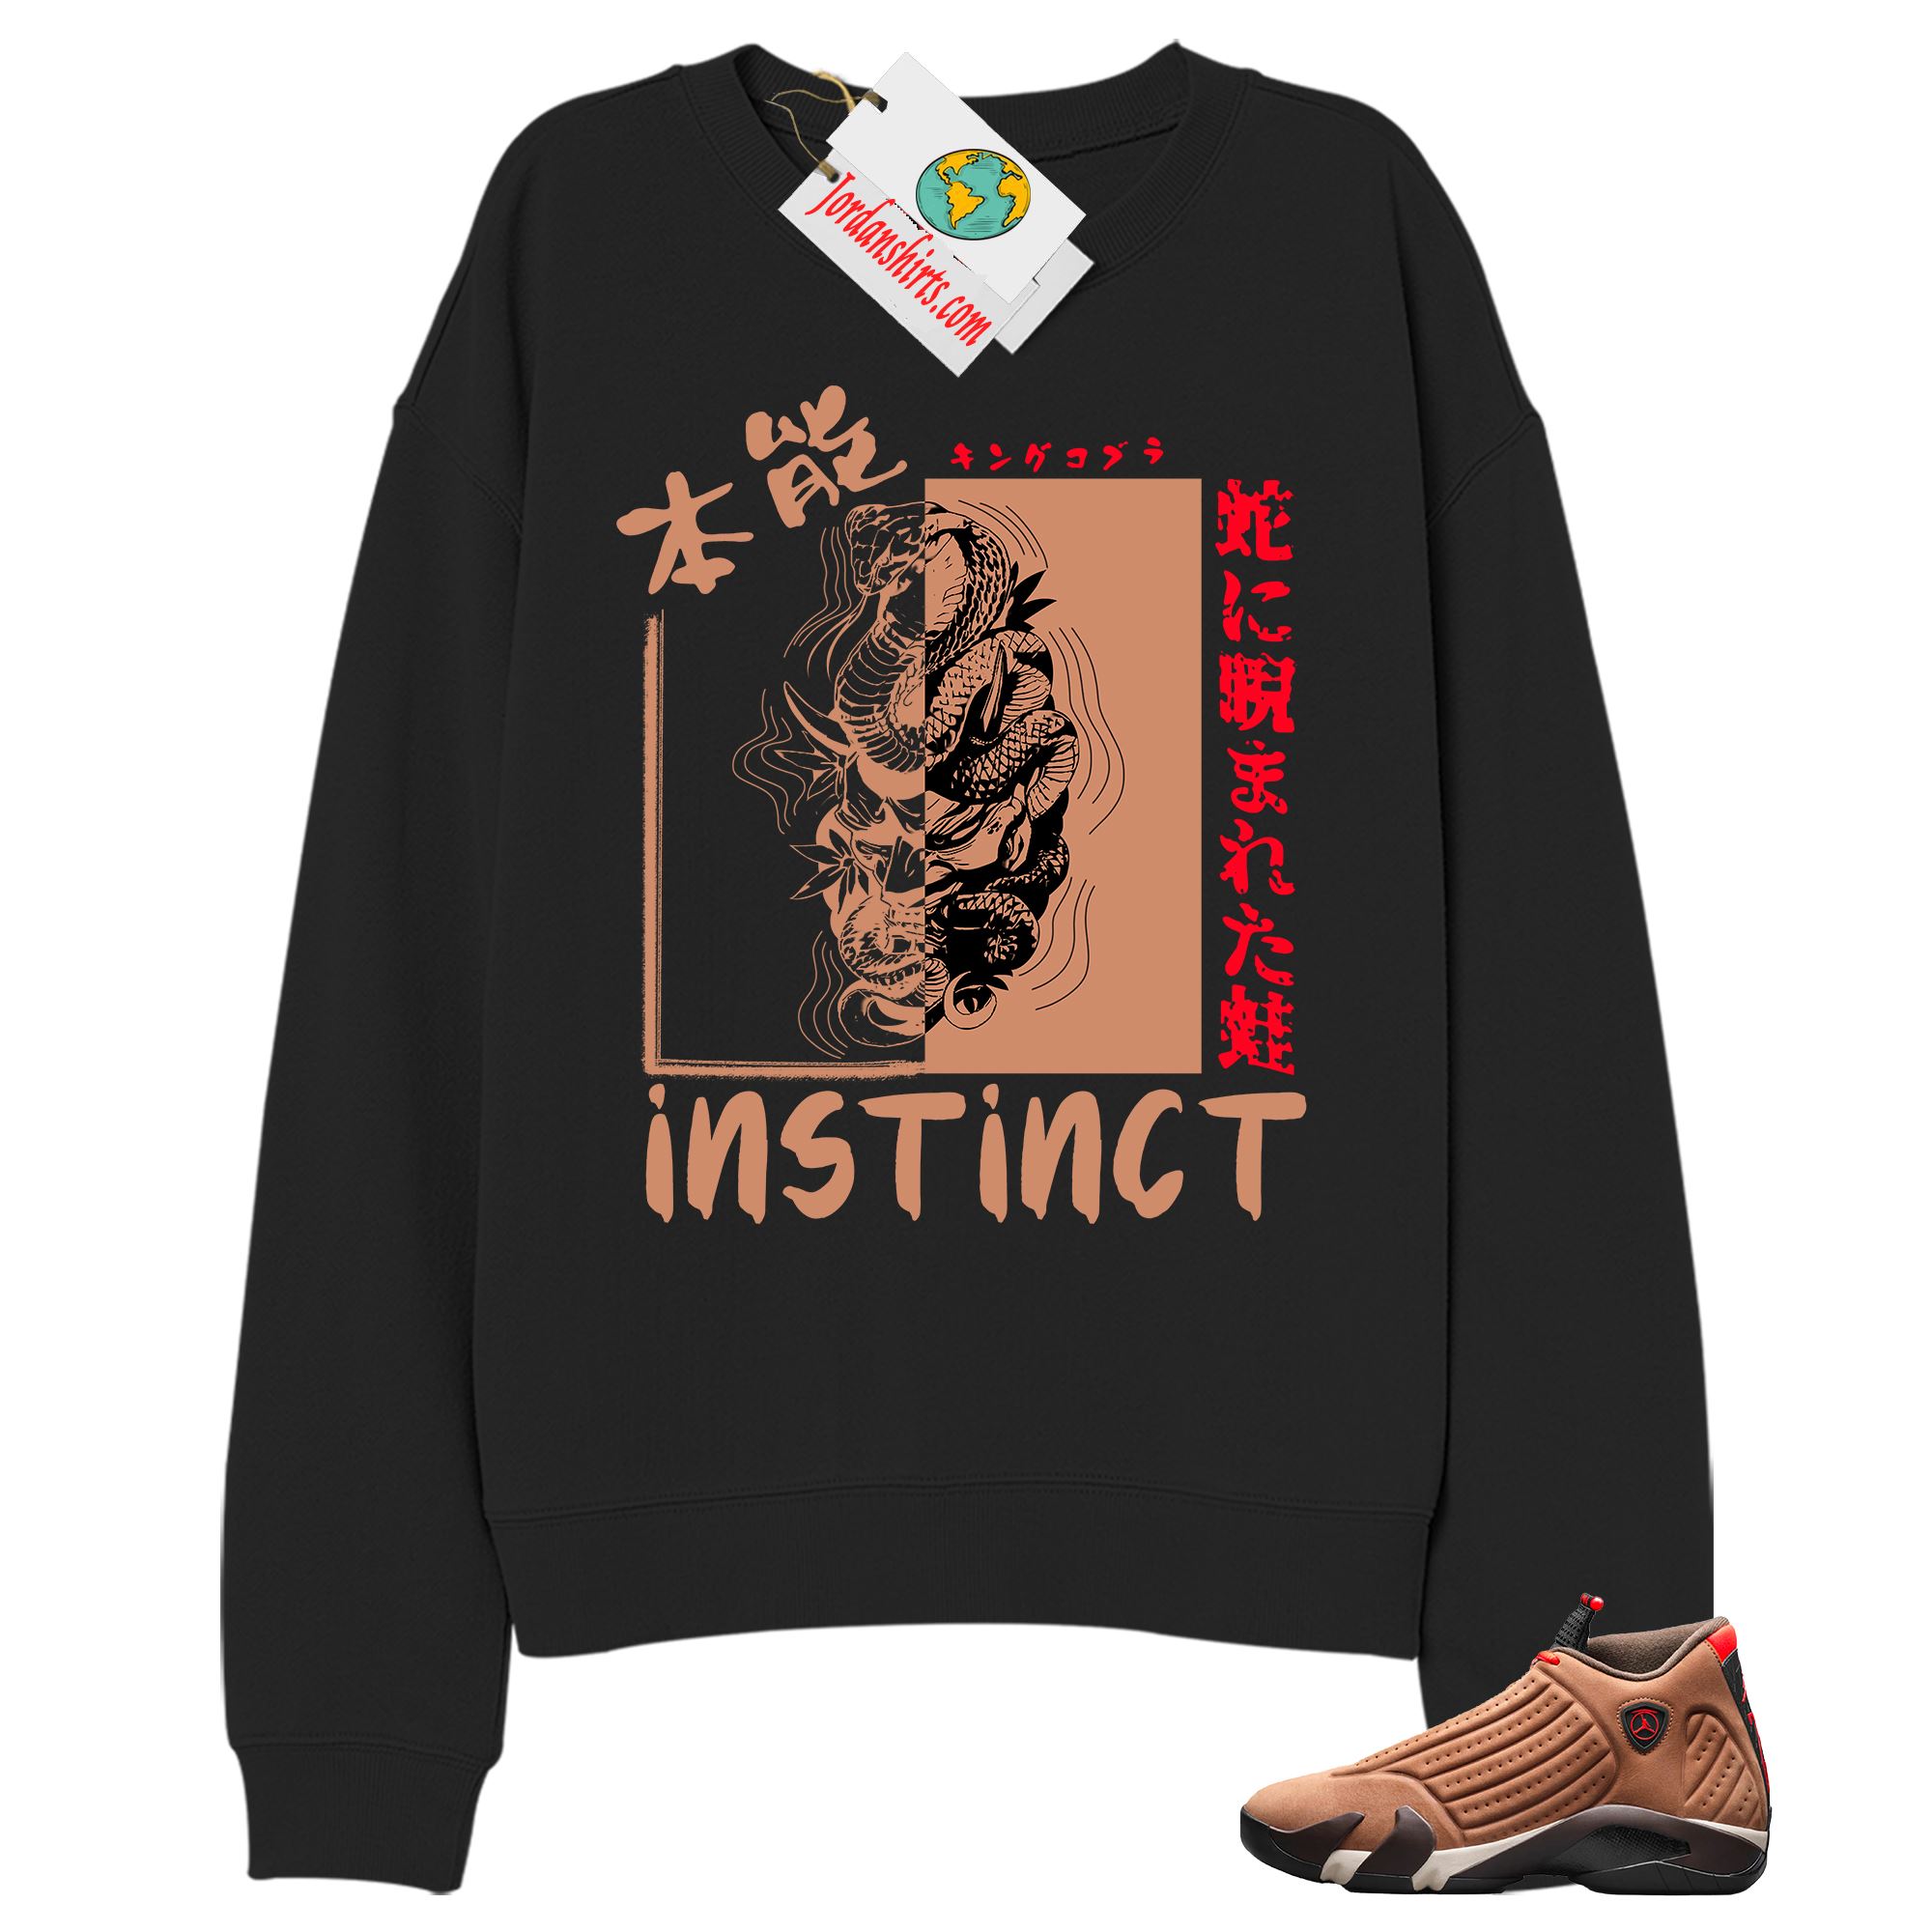 Jordan 14 Sweatshirt, Instinct Fearless Snake Black Sweatshirt Air Jordan 14 Winterized 14s Full Size Up To 5xl